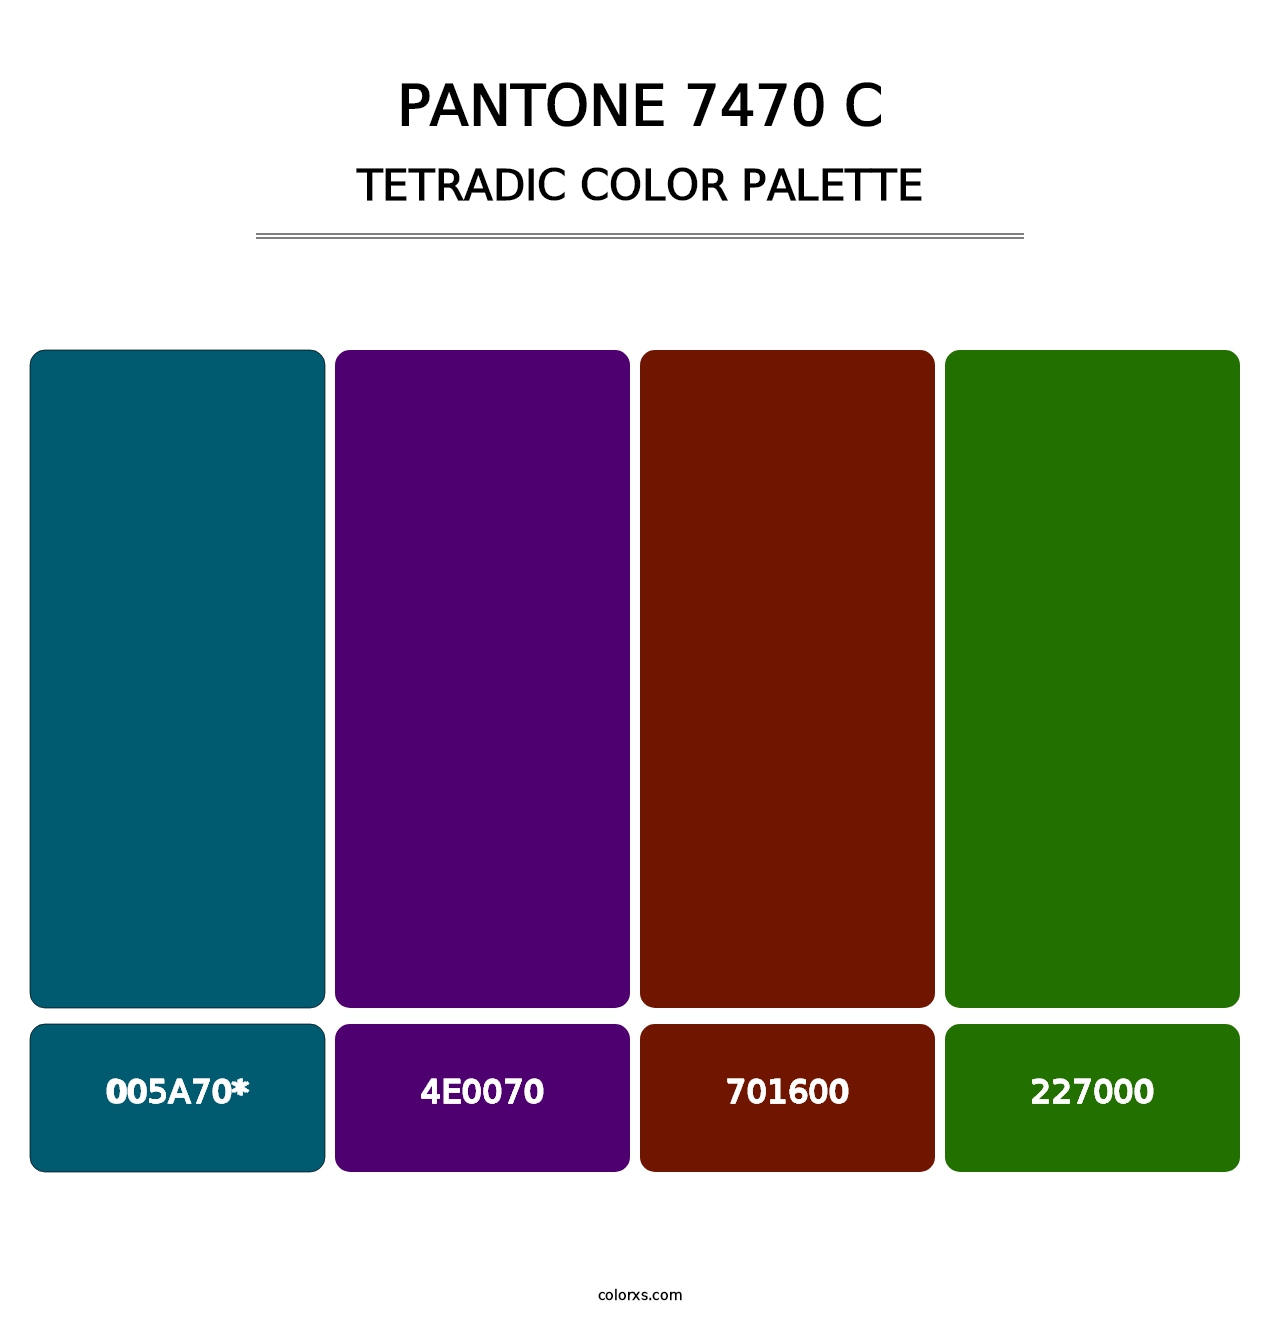 PANTONE 7470 C - Tetradic Color Palette